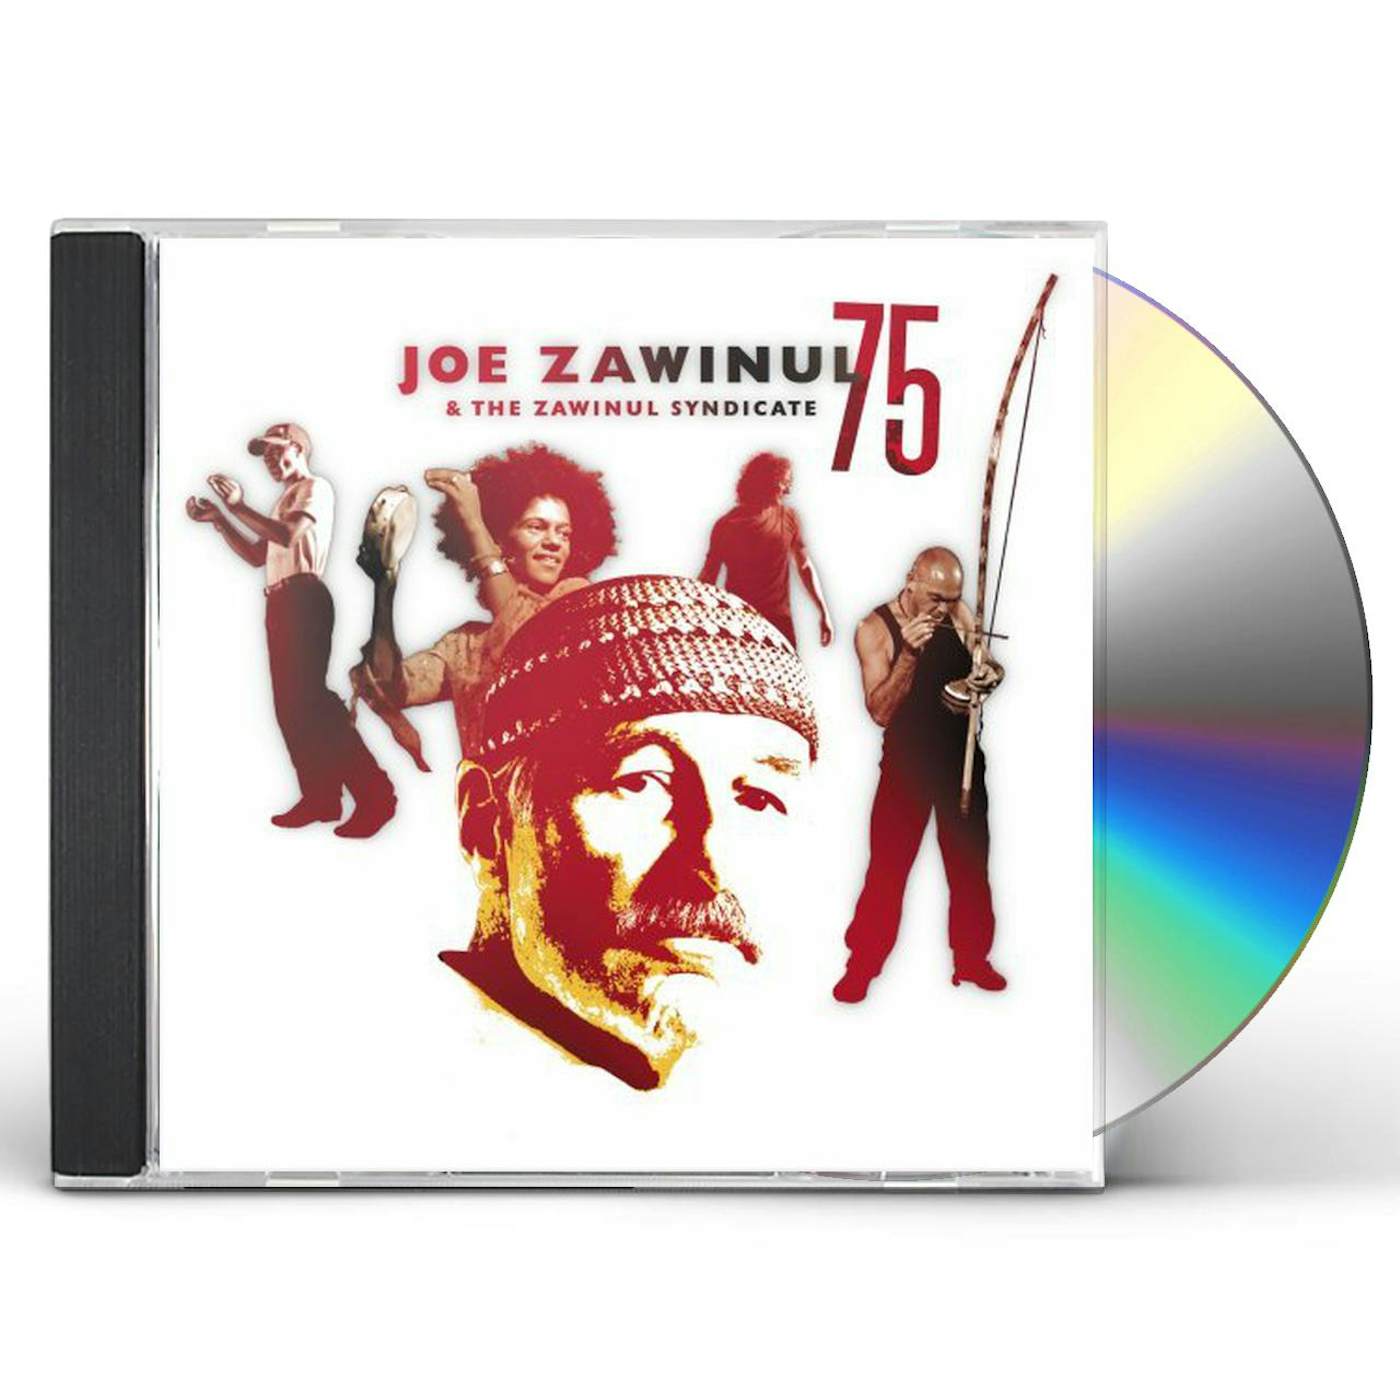 Joe Zawinul 75 CD